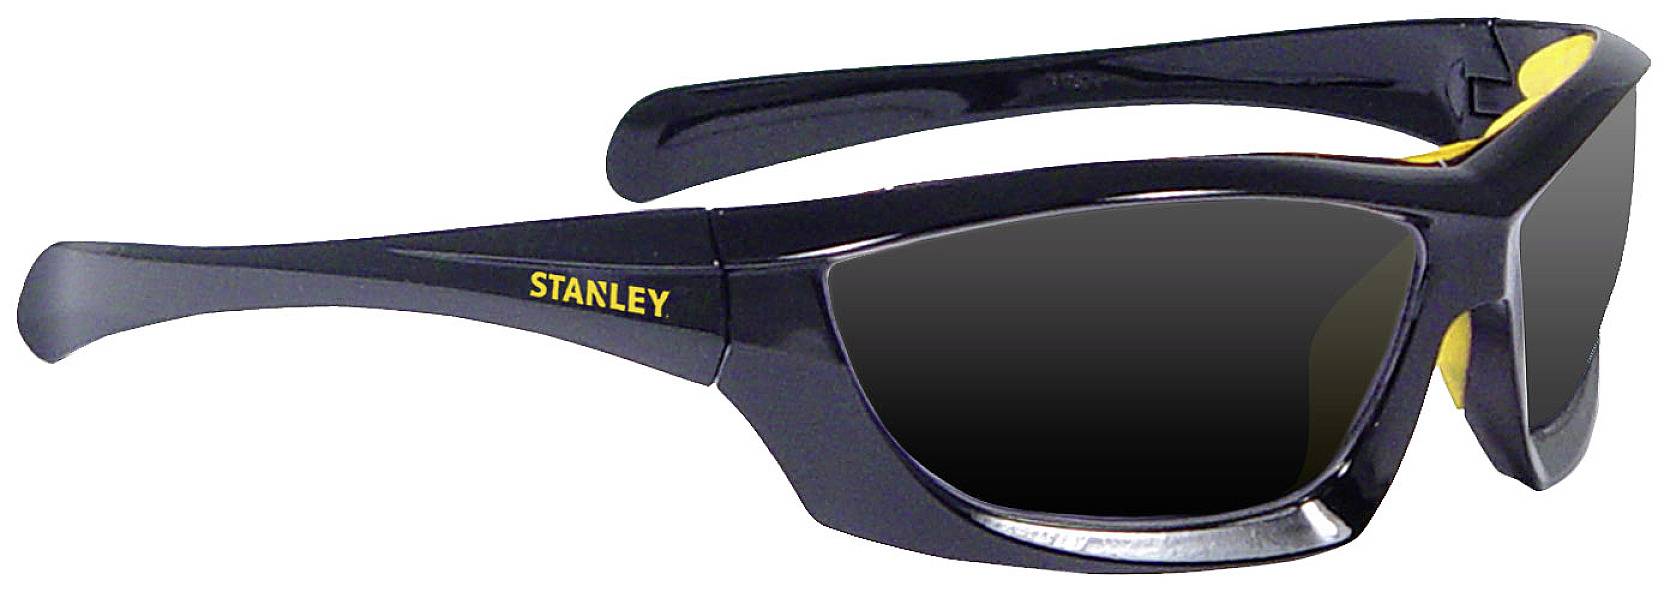 BLACK+DECKER Stanley by Black & Decker Stanley Full Frame Smoke Safety Glasses SY180-2D EU 